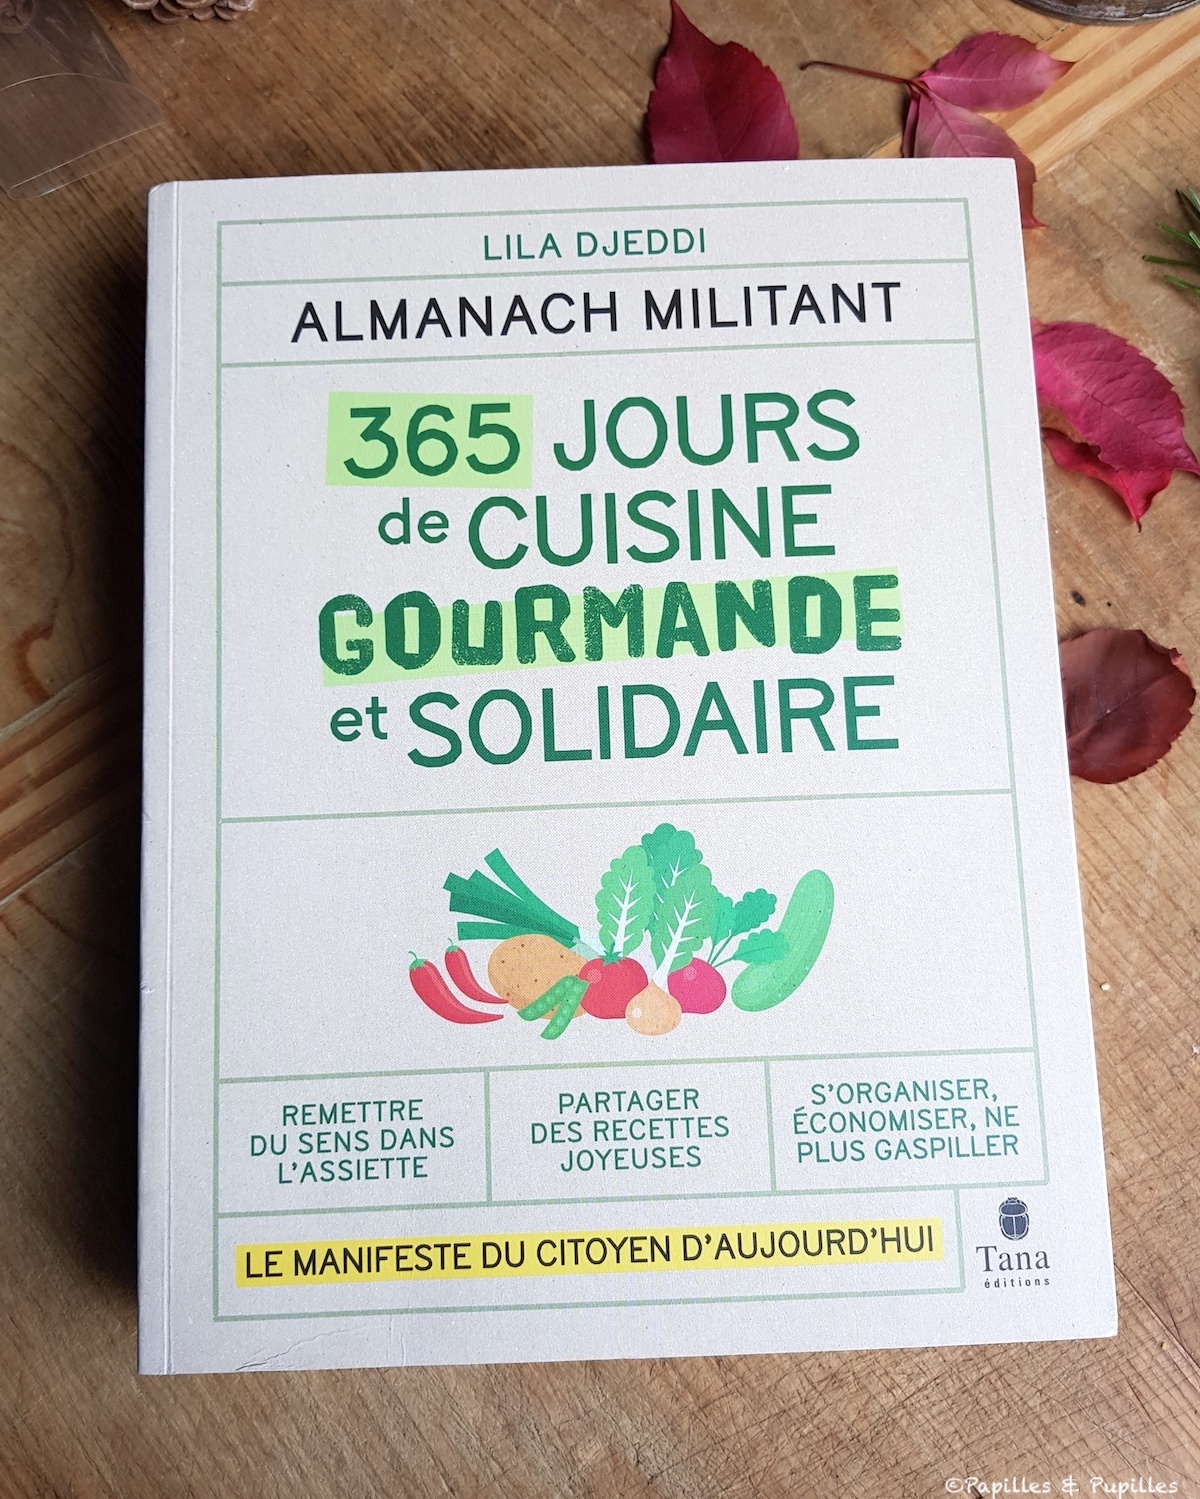 Almanach Militant - Lila Djeddi